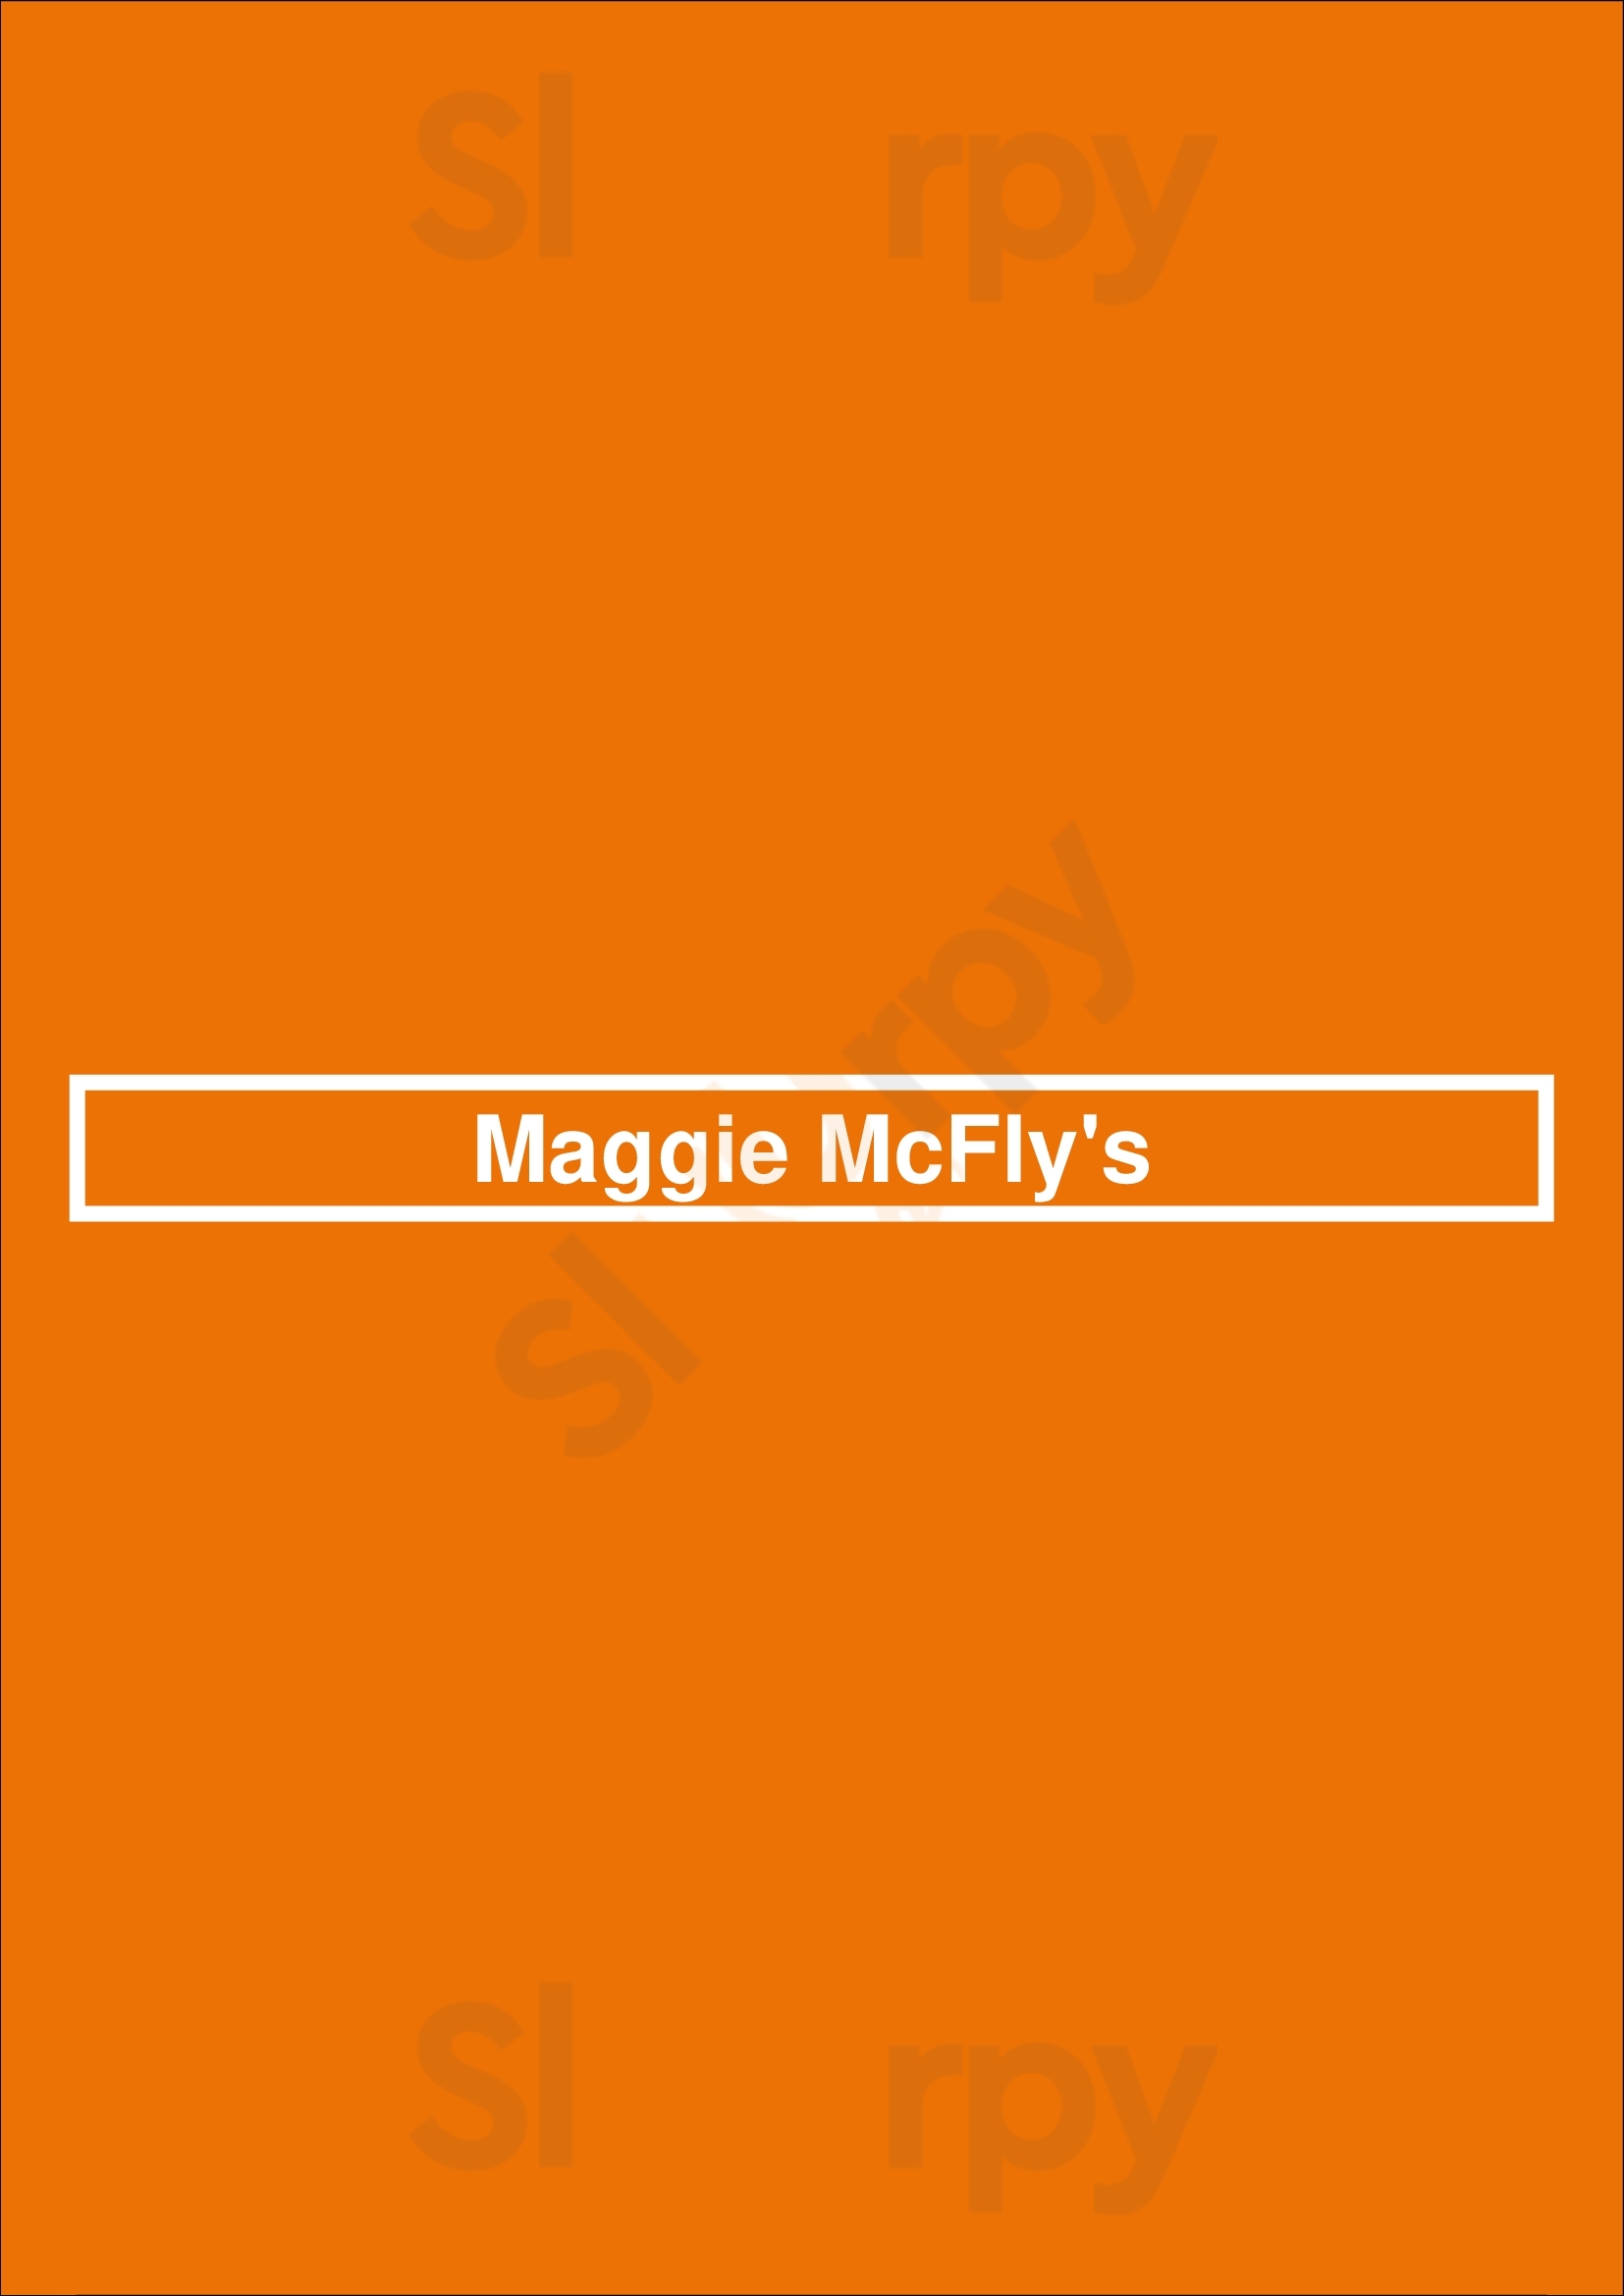 Maggie Mcfly's Albany Menu - 1